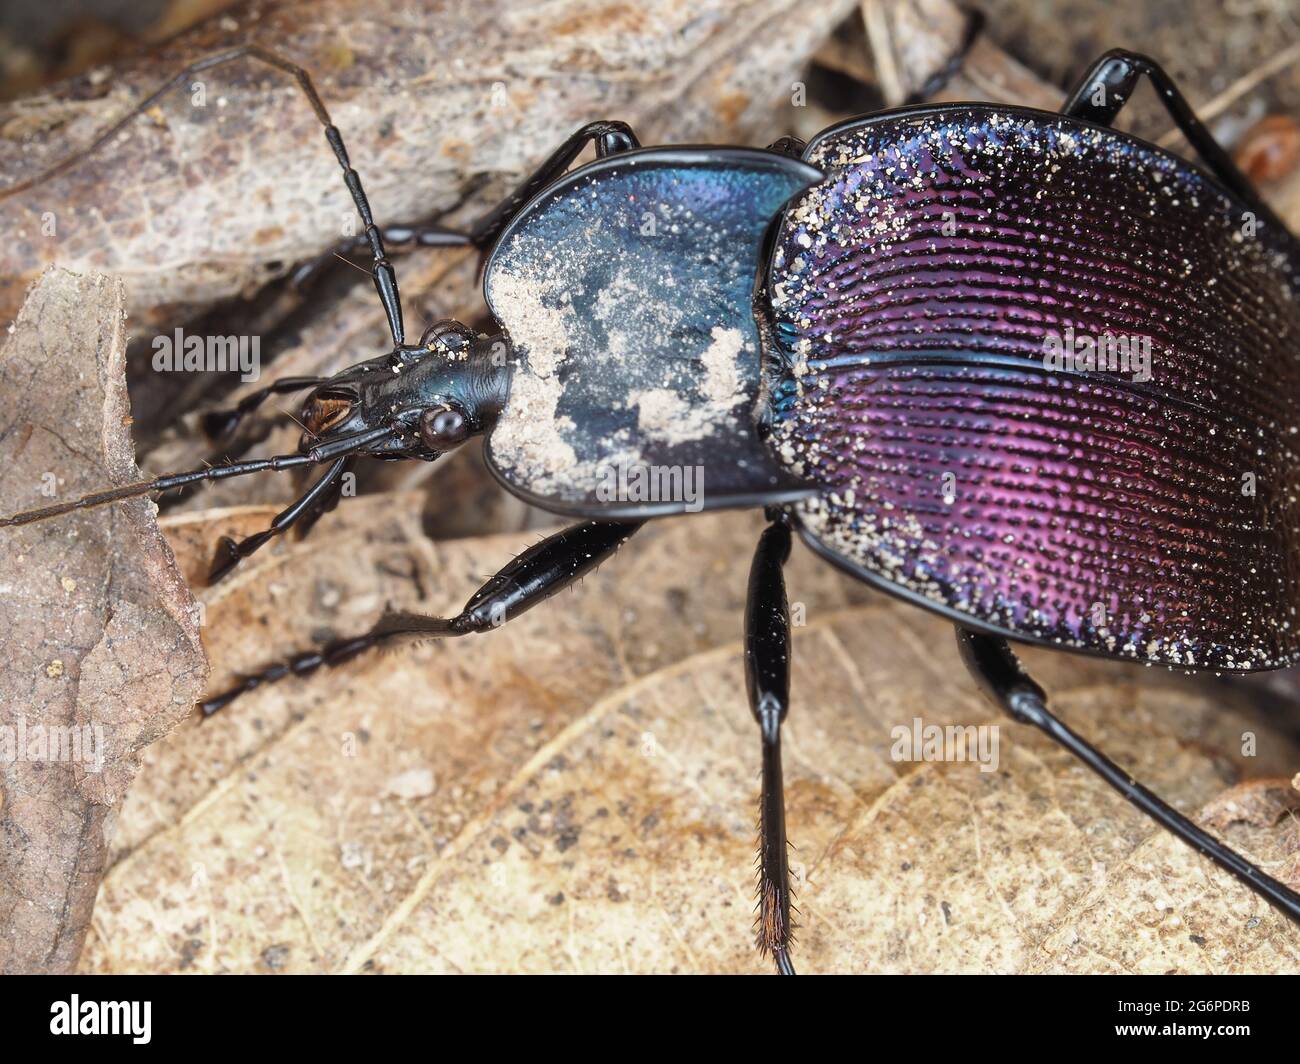 Iridescent ground beetle, possibly Scaphinotus sp. Stock Photo